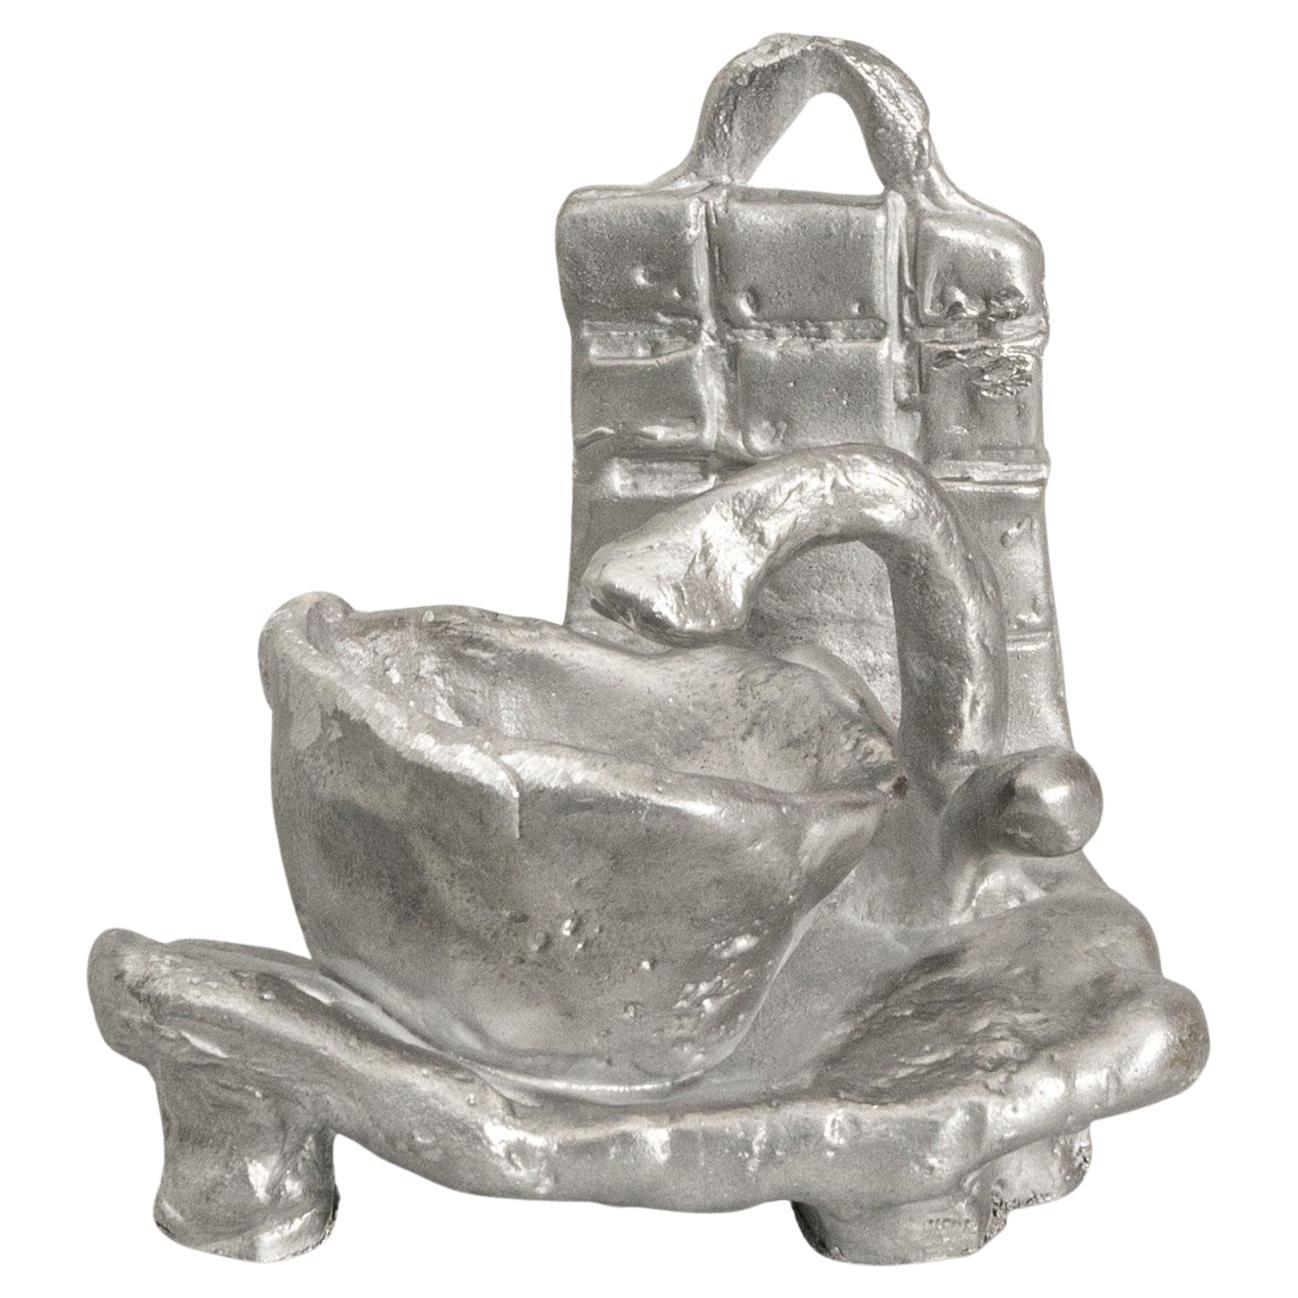 Handmade Aluminium cast standing sculpture depicting 'Low Sink' For Sale